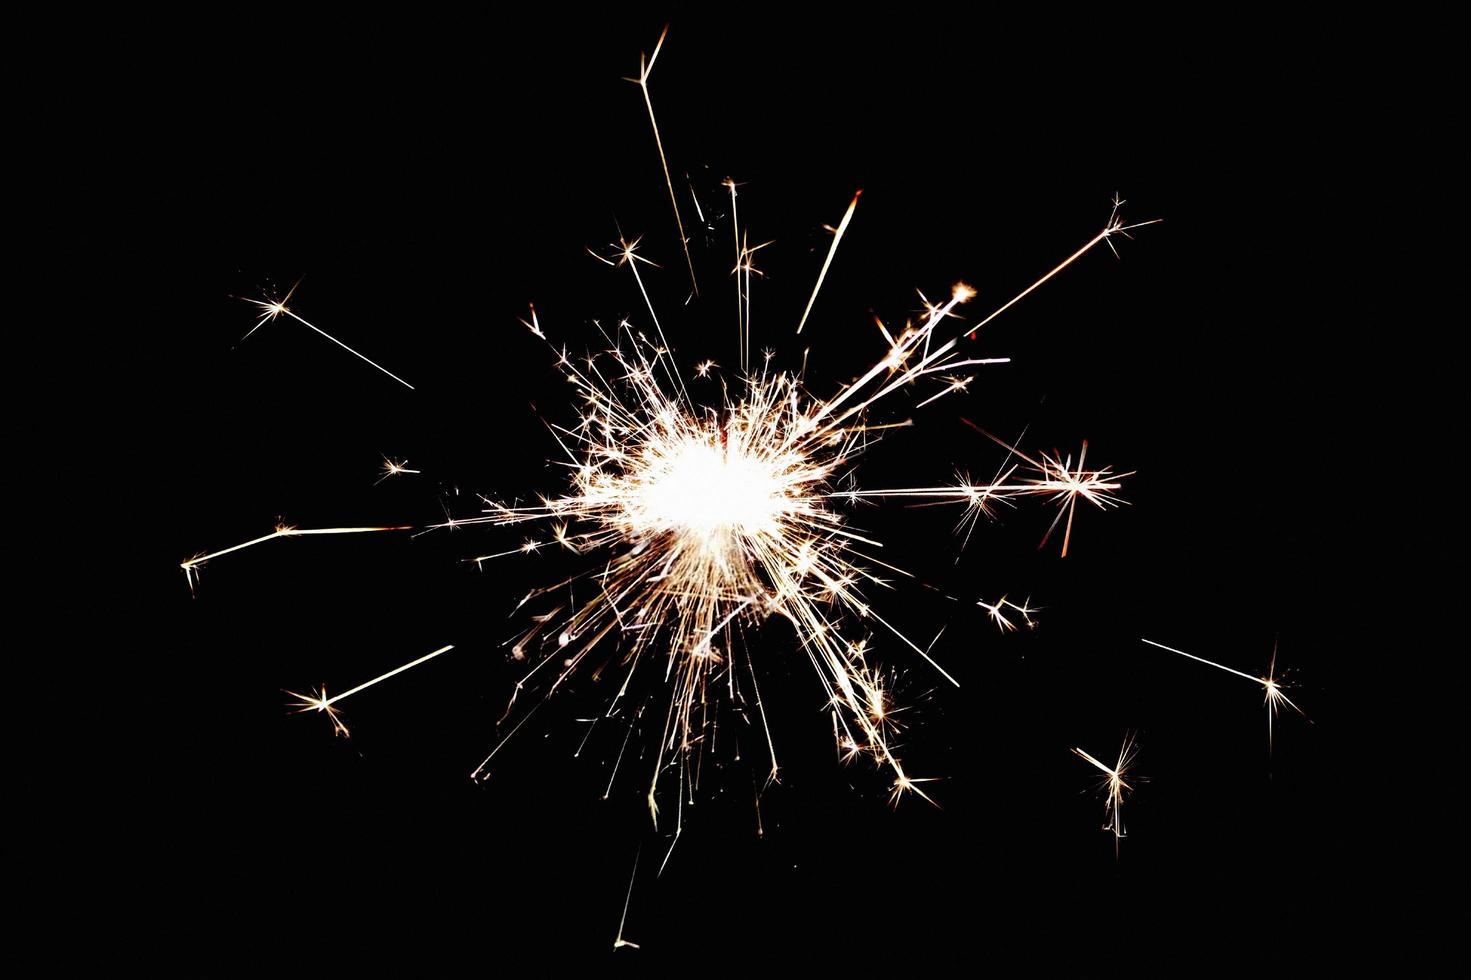 isolated firework burning bright sparkling overlay texture black background stock photo